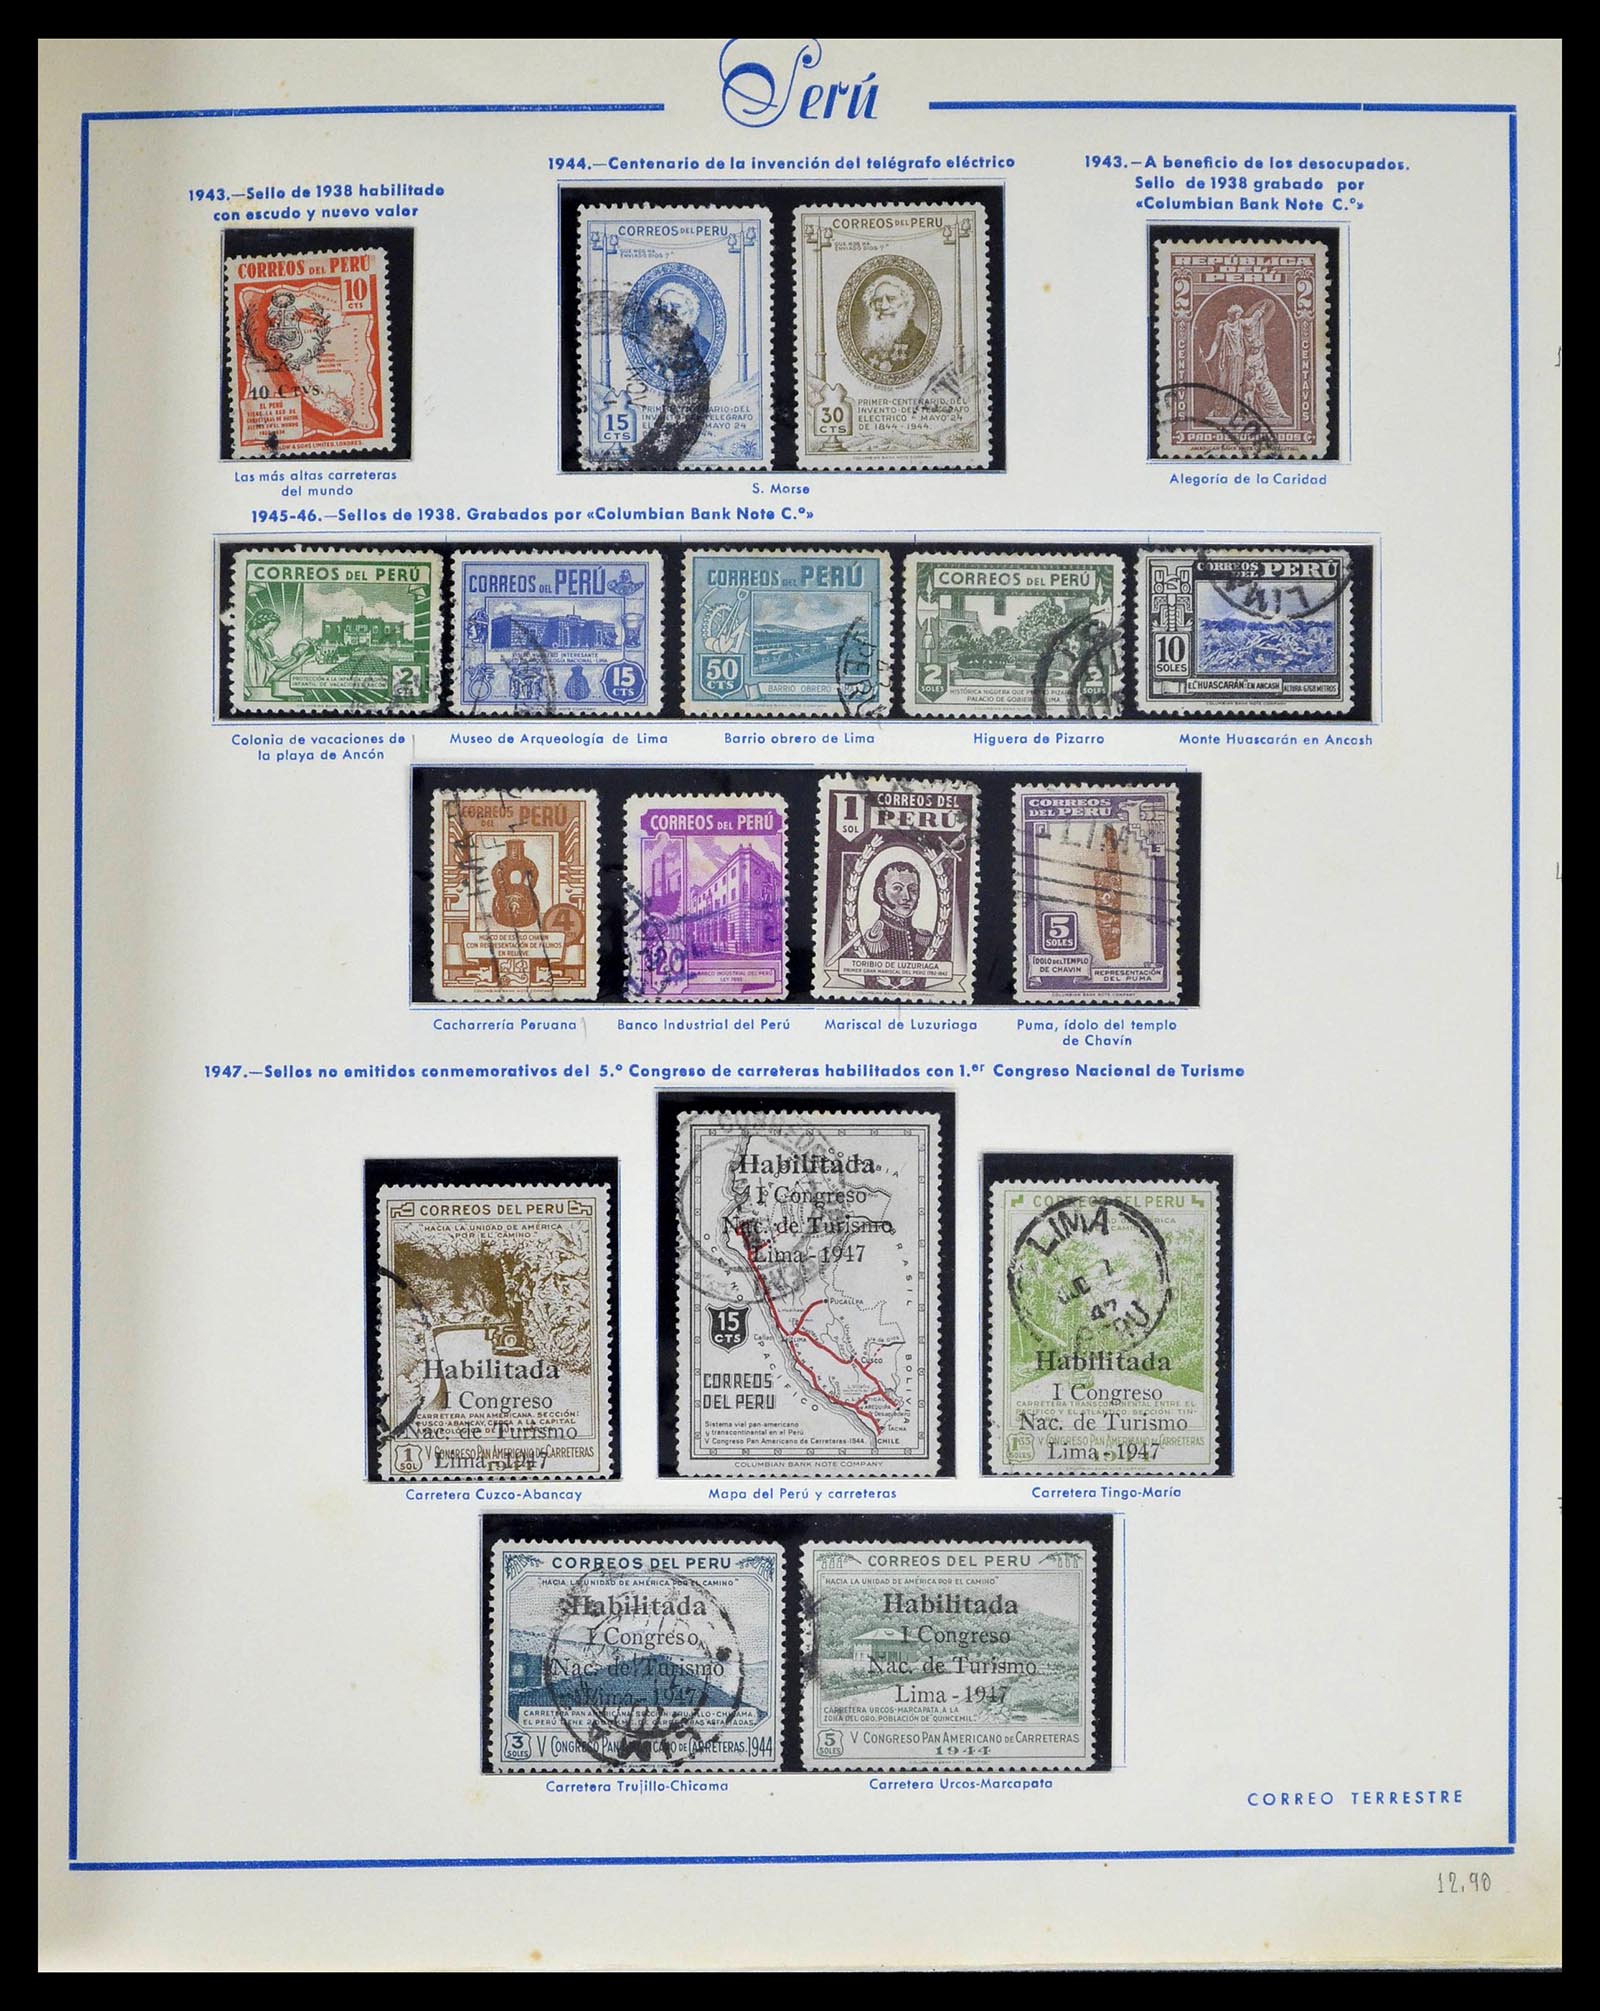 39214 0022 - Stamp collection 39214 Peru 1857-1981.